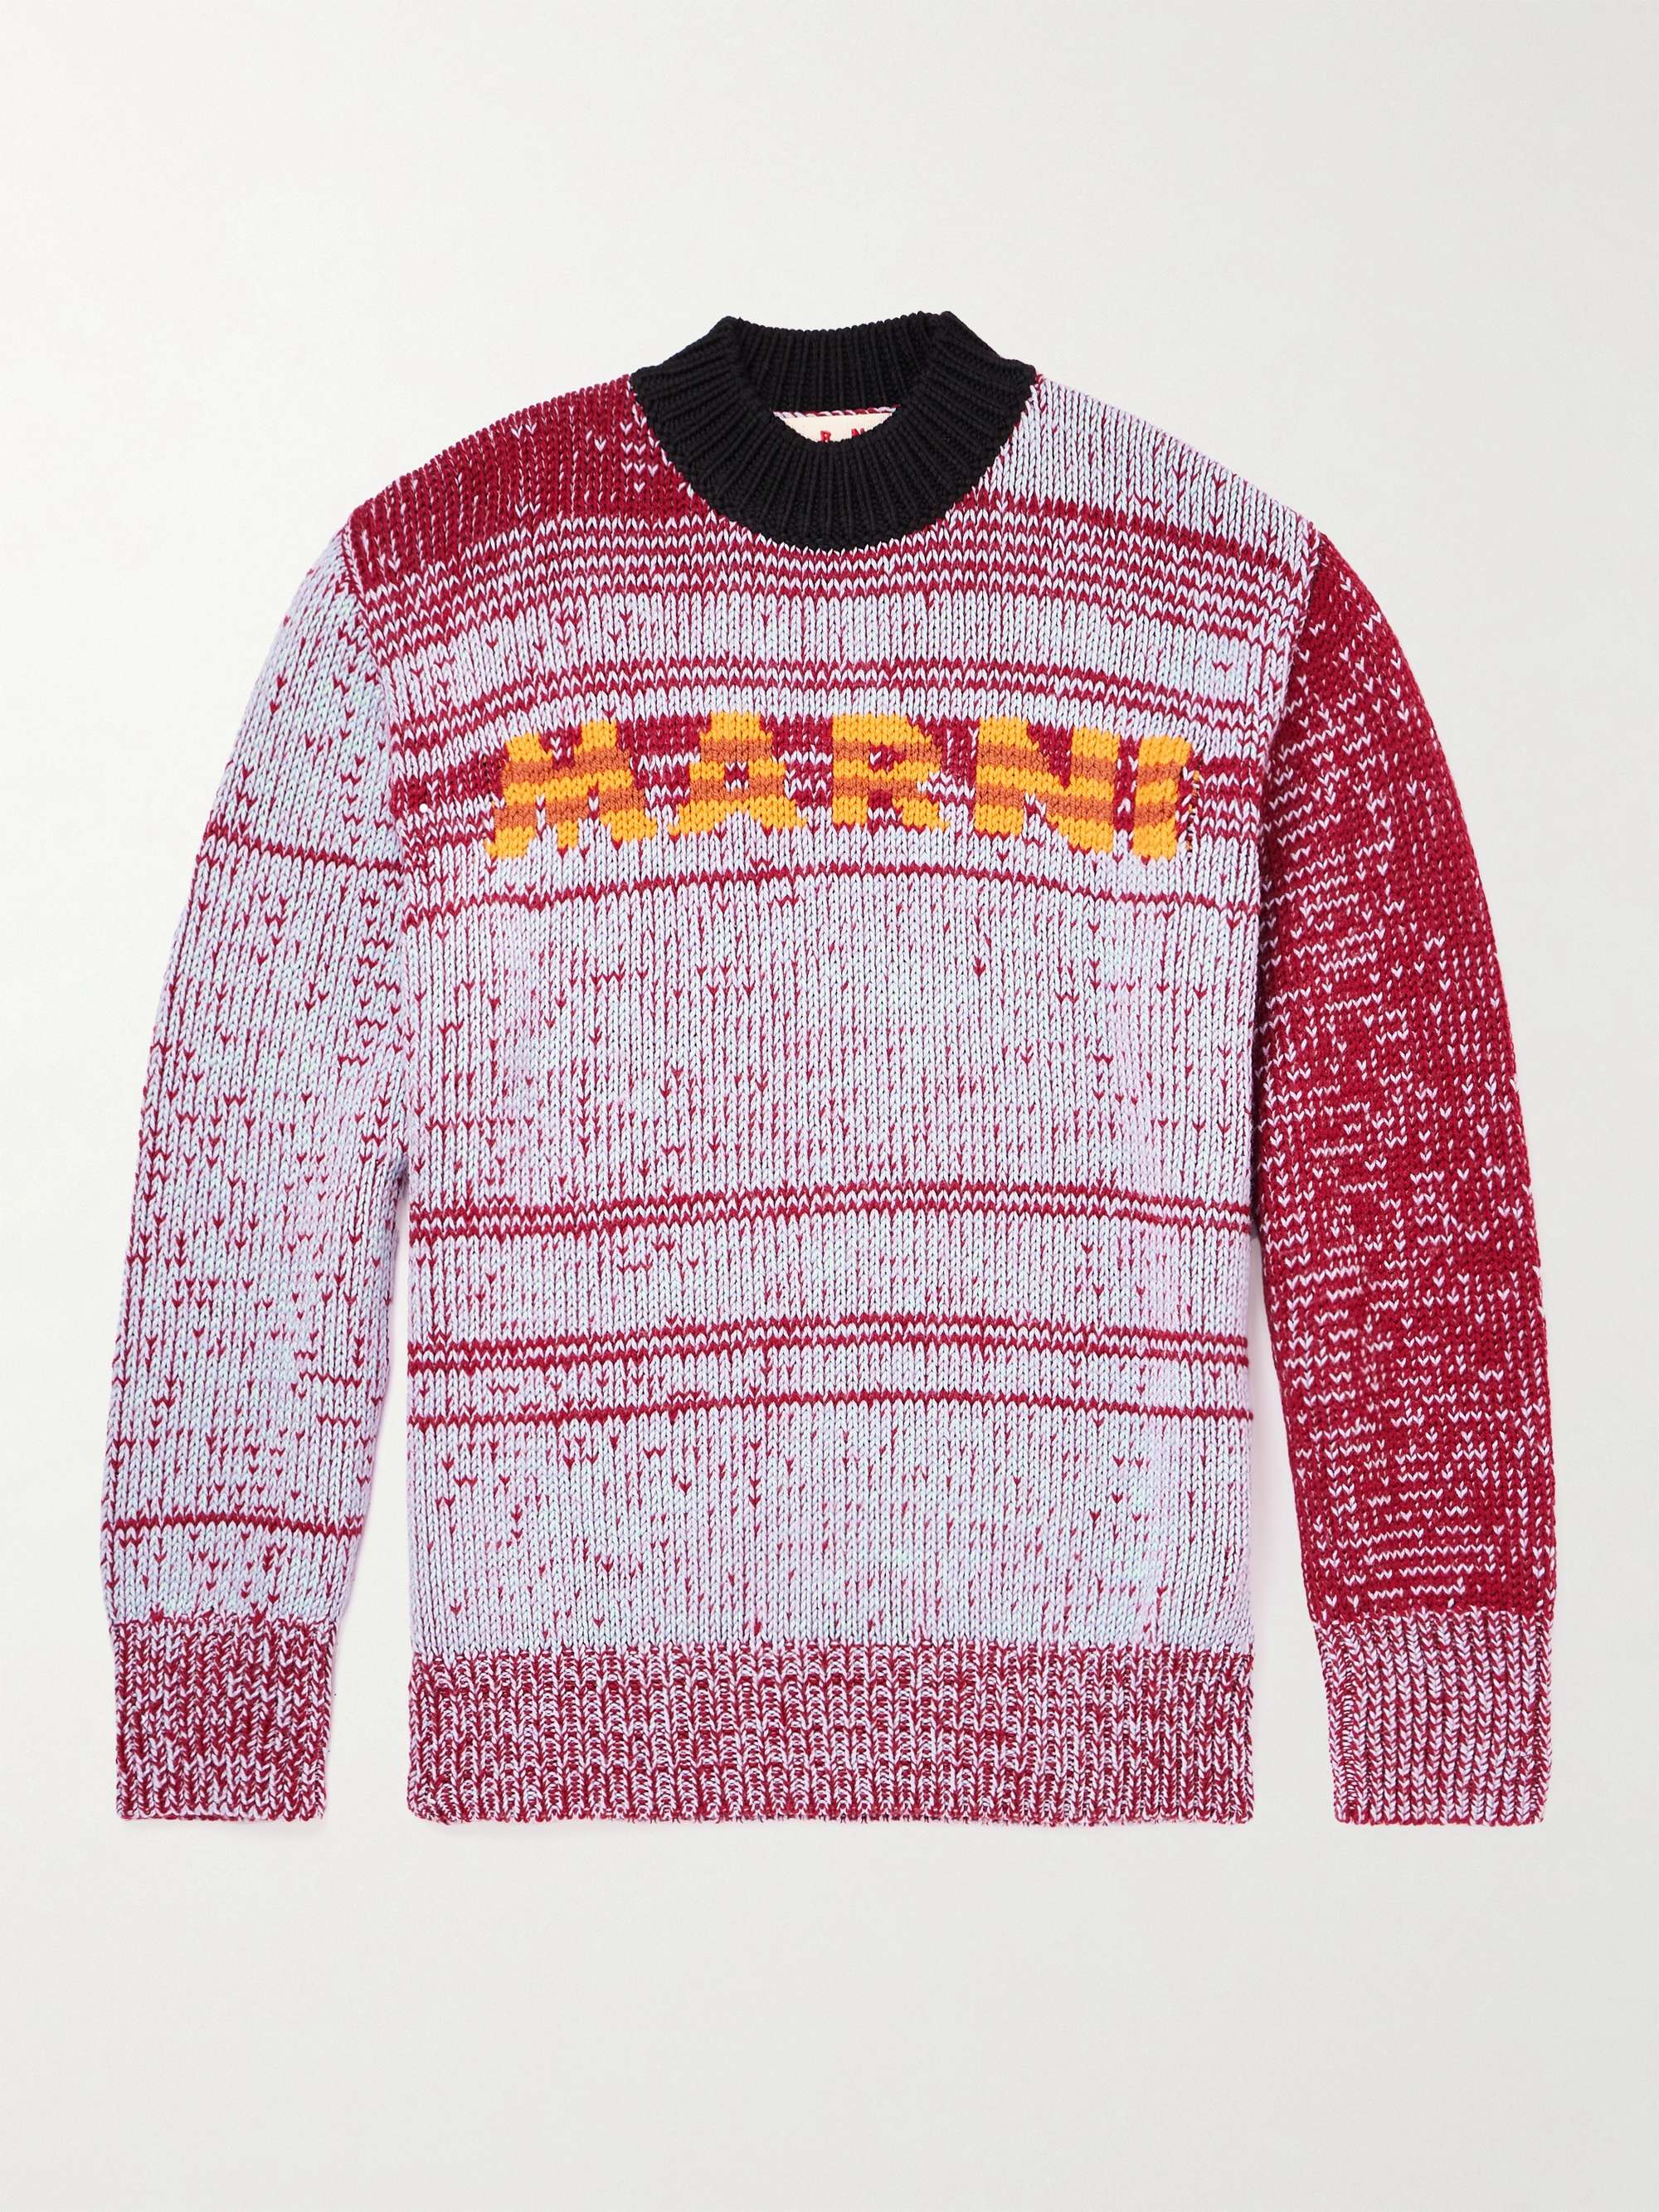 MARNI Logo-Intarsia Wool Sweater for Men | MR PORTER